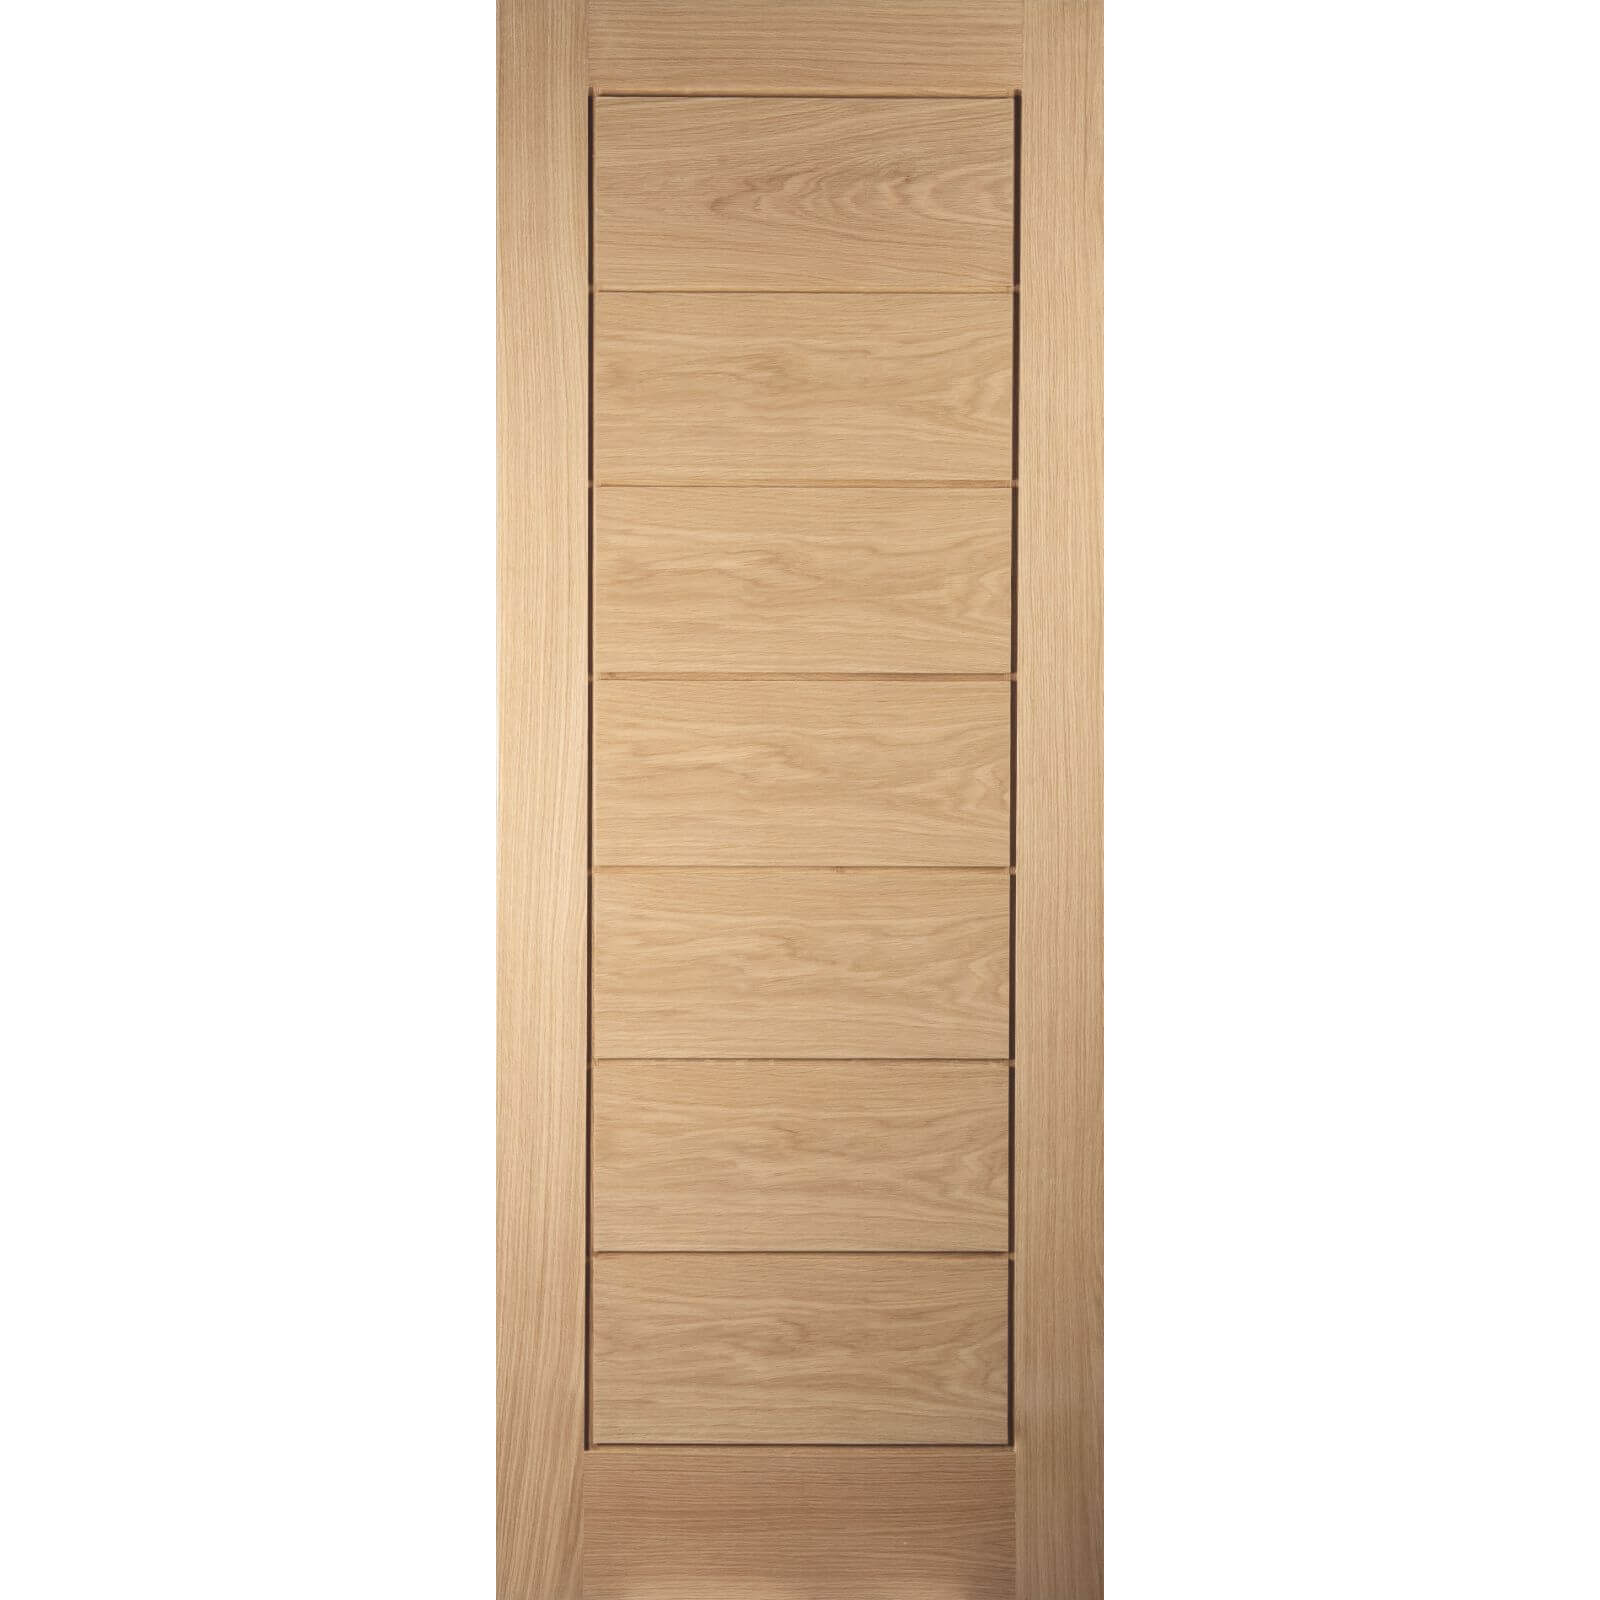 Horizontal 7 Panel White Oak Veneer Internal Door - 686mm Wide